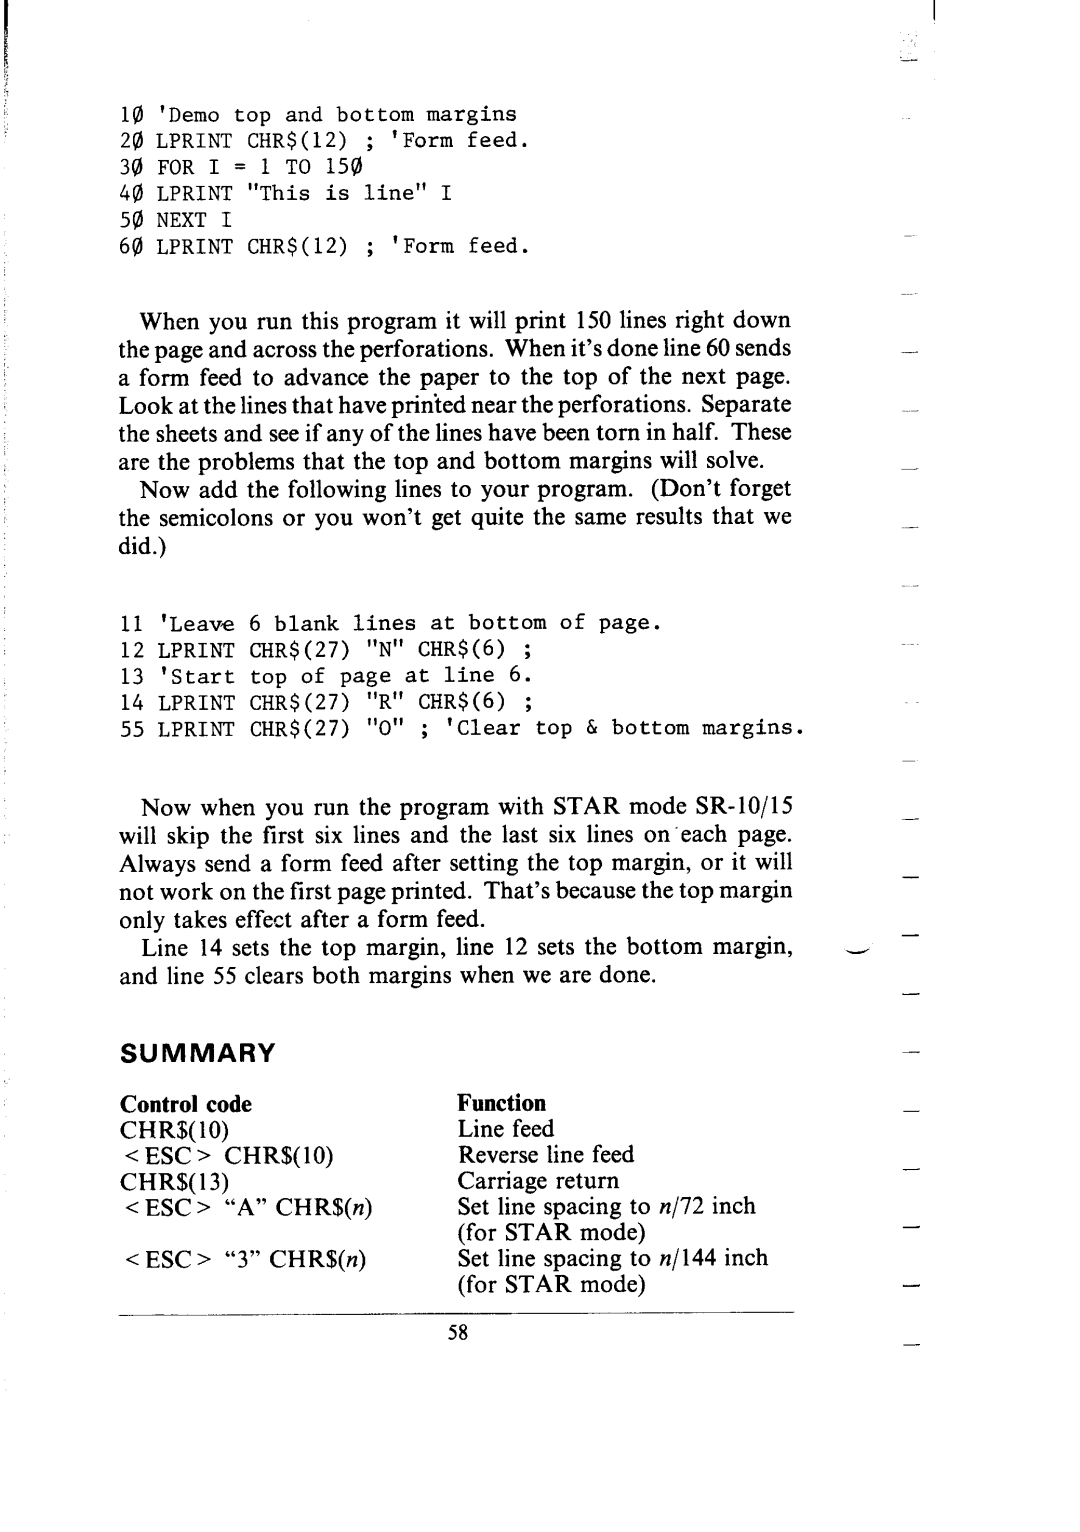 Star Micronics SR-10/I5 user manual Summary, Control code, Function, Demo top and bottom margins 20 LPRINT CHR$12 Form feed 